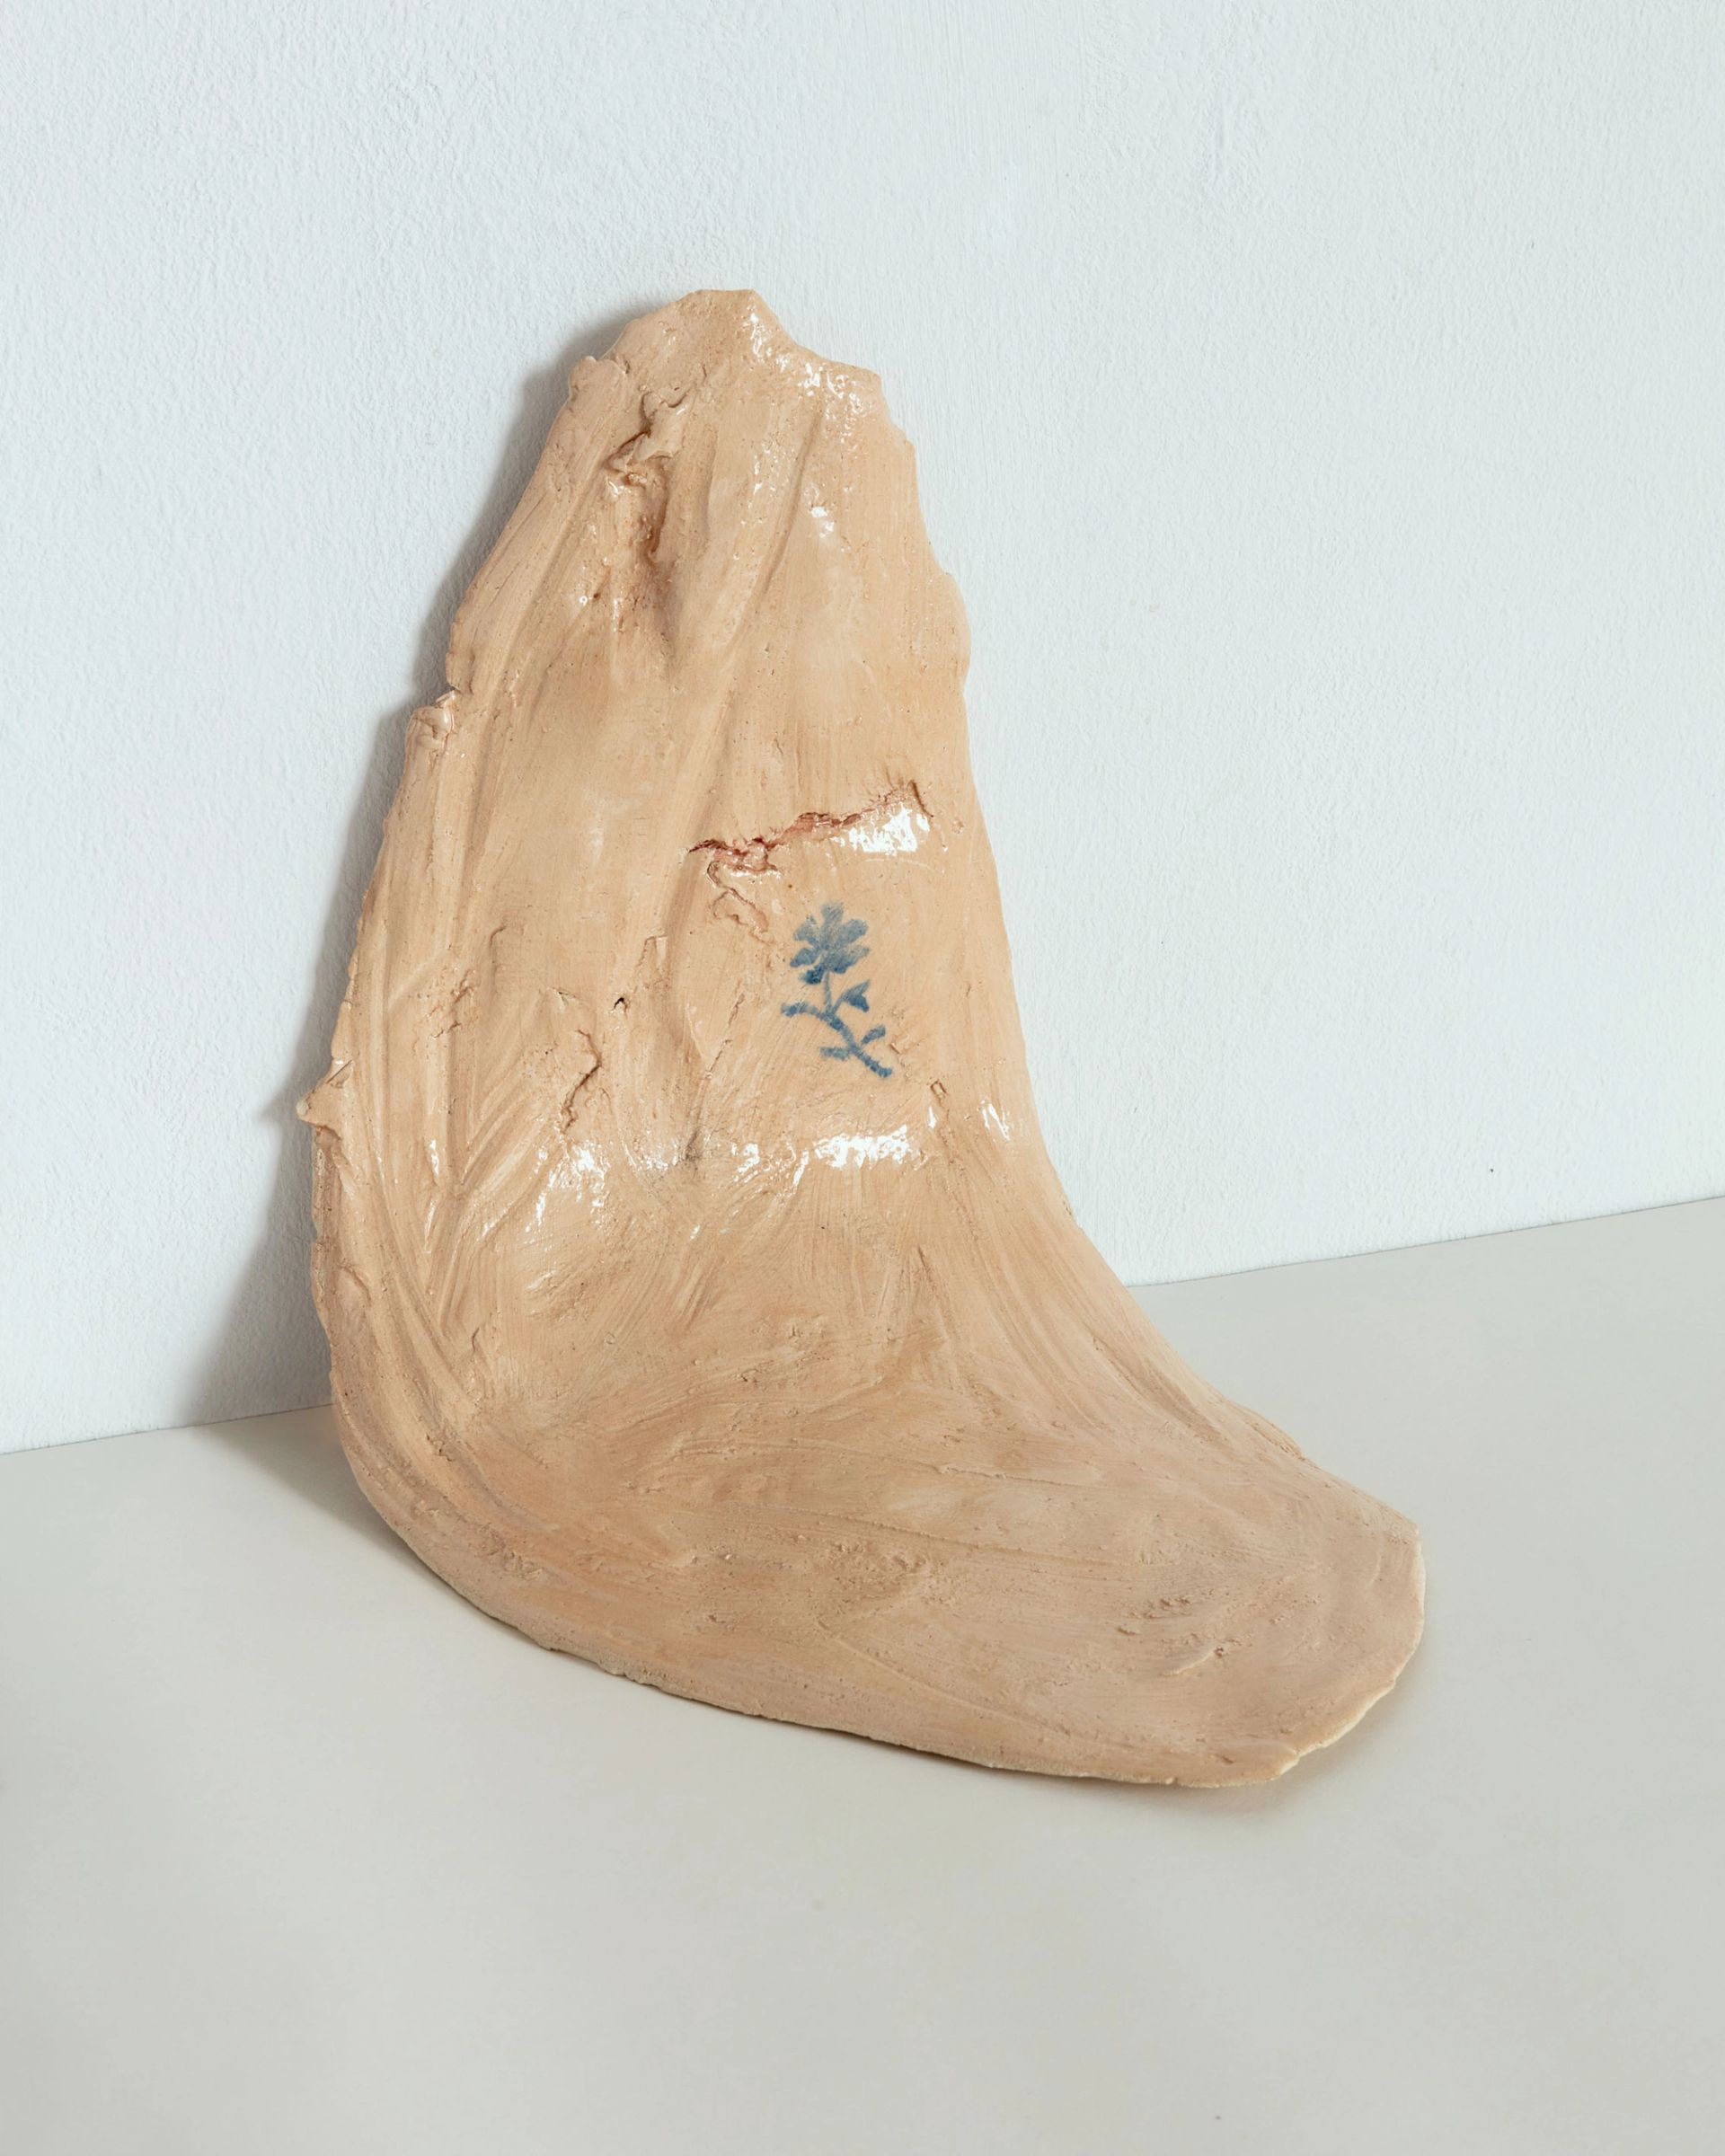 Veronika Hilger, Untitled, 2017, ceramic, glazed, 25 × 22 × 23 cm